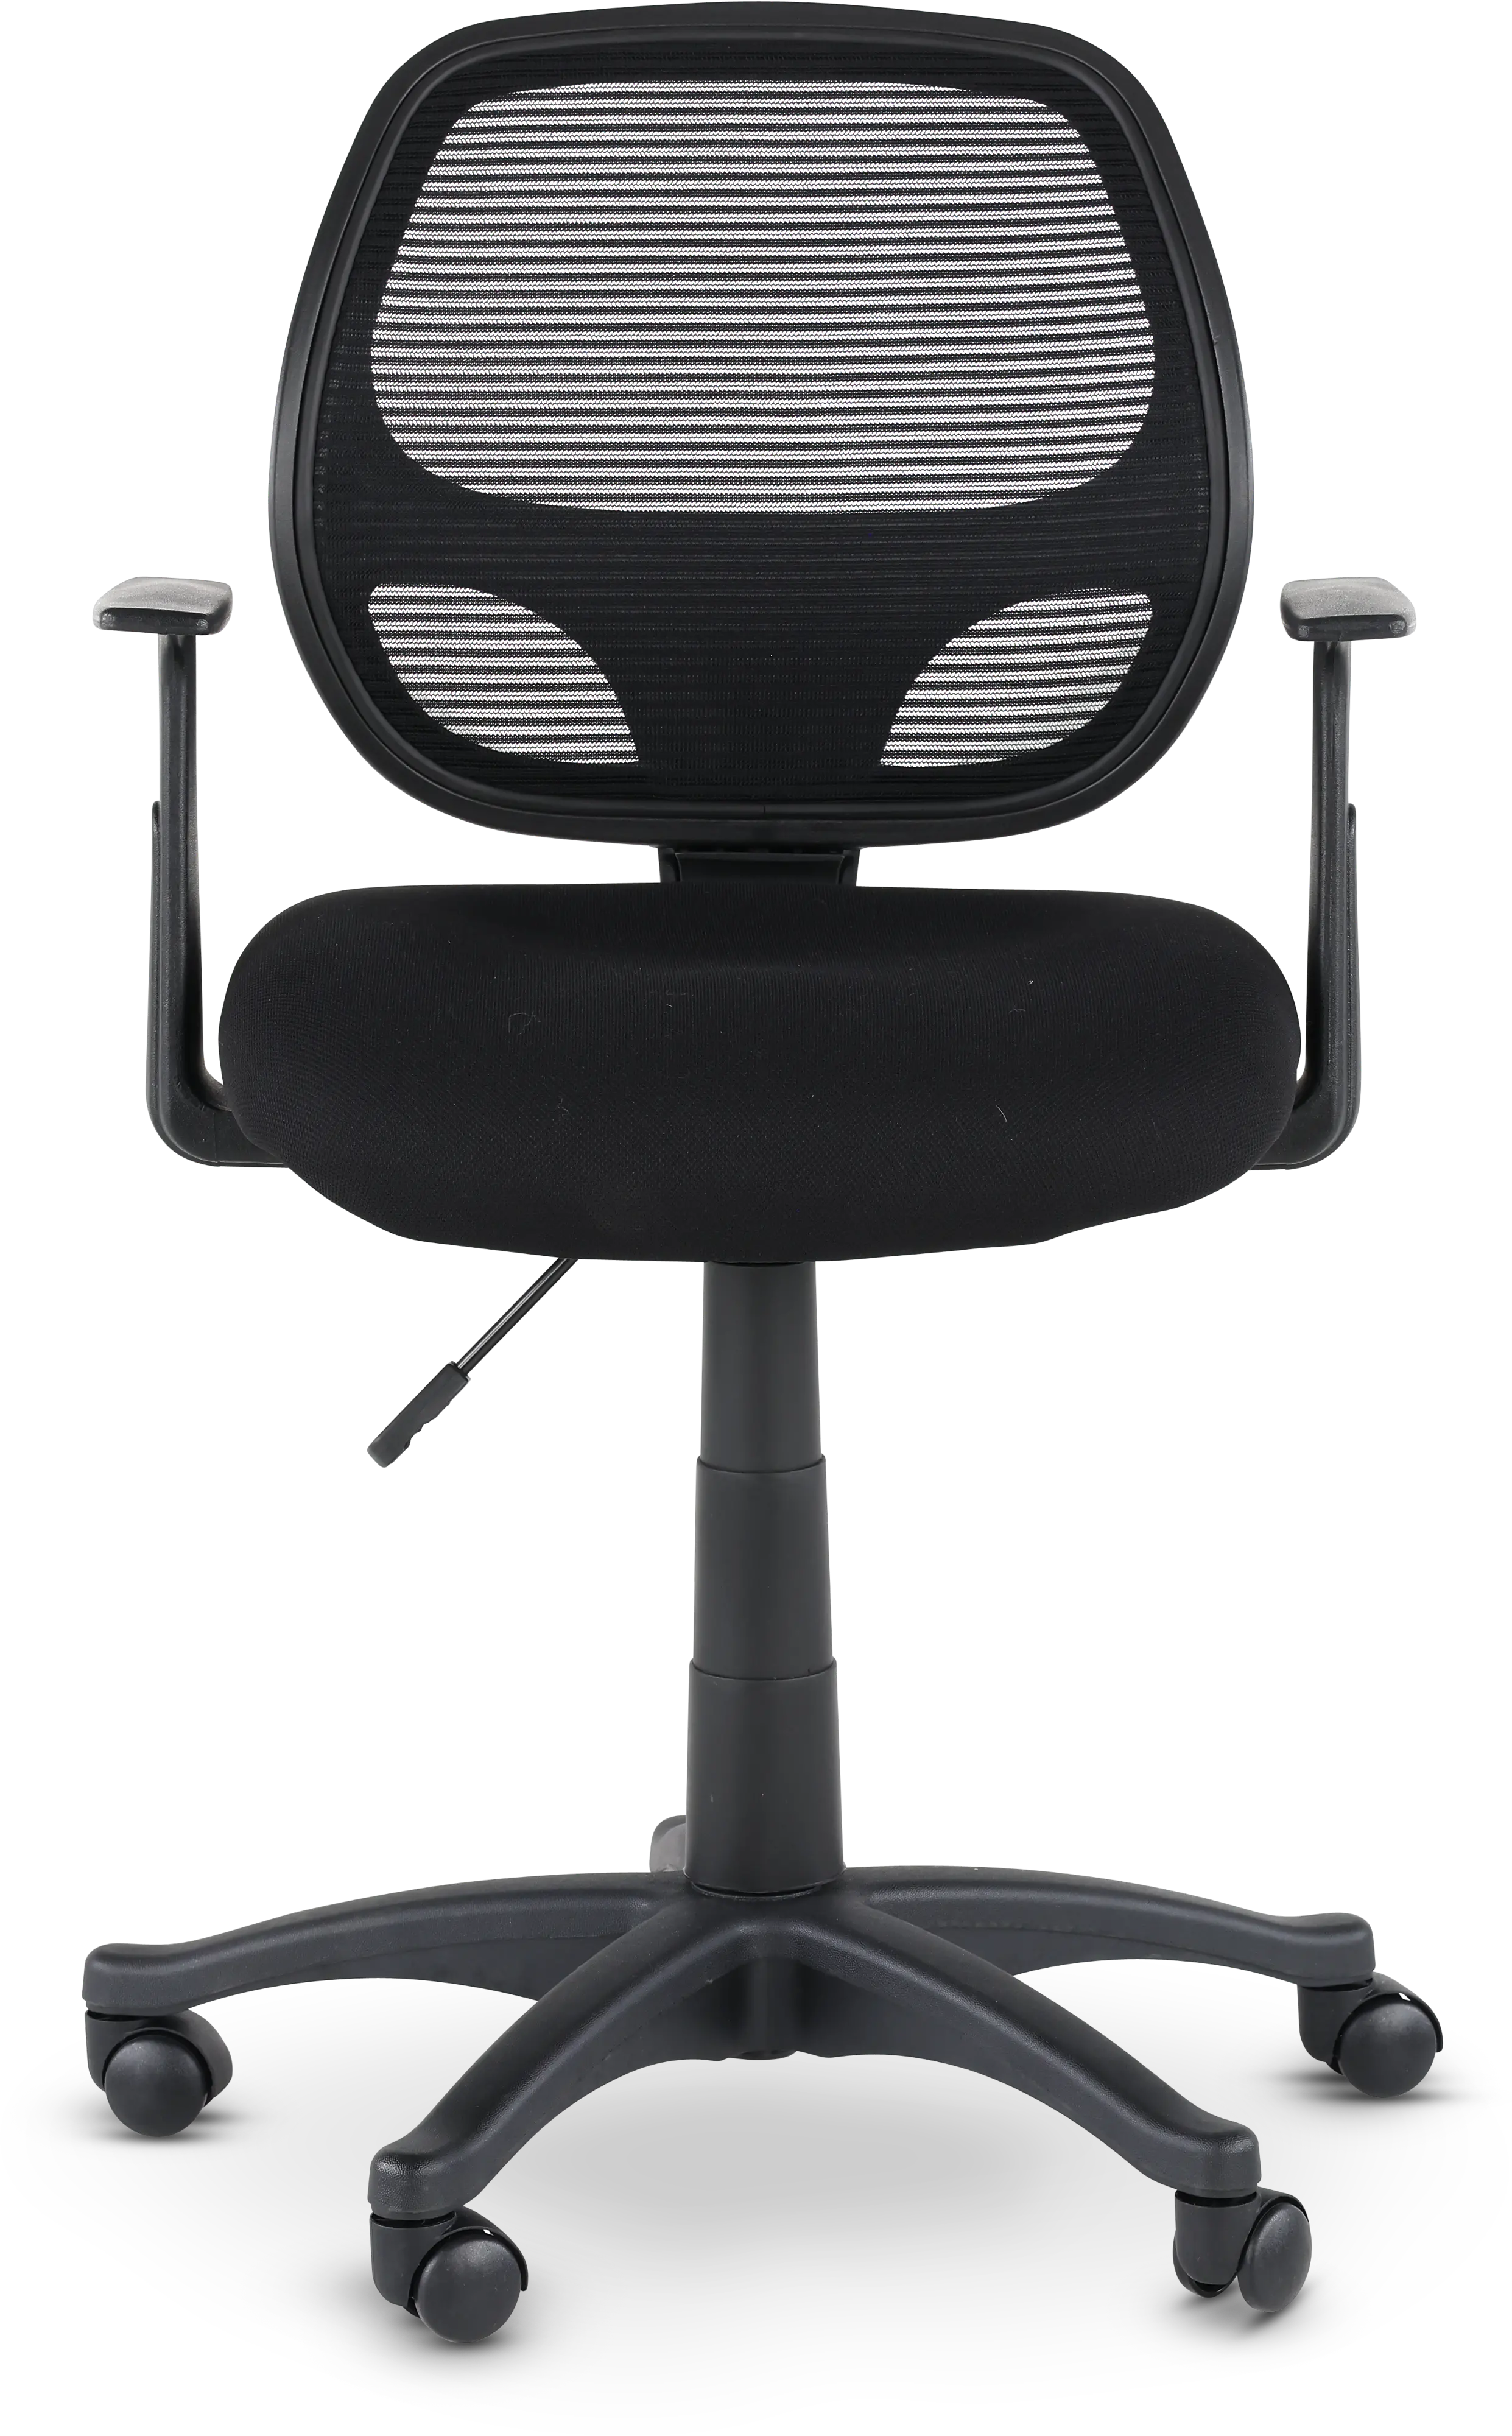 Black Mesh Swivel Office Chair